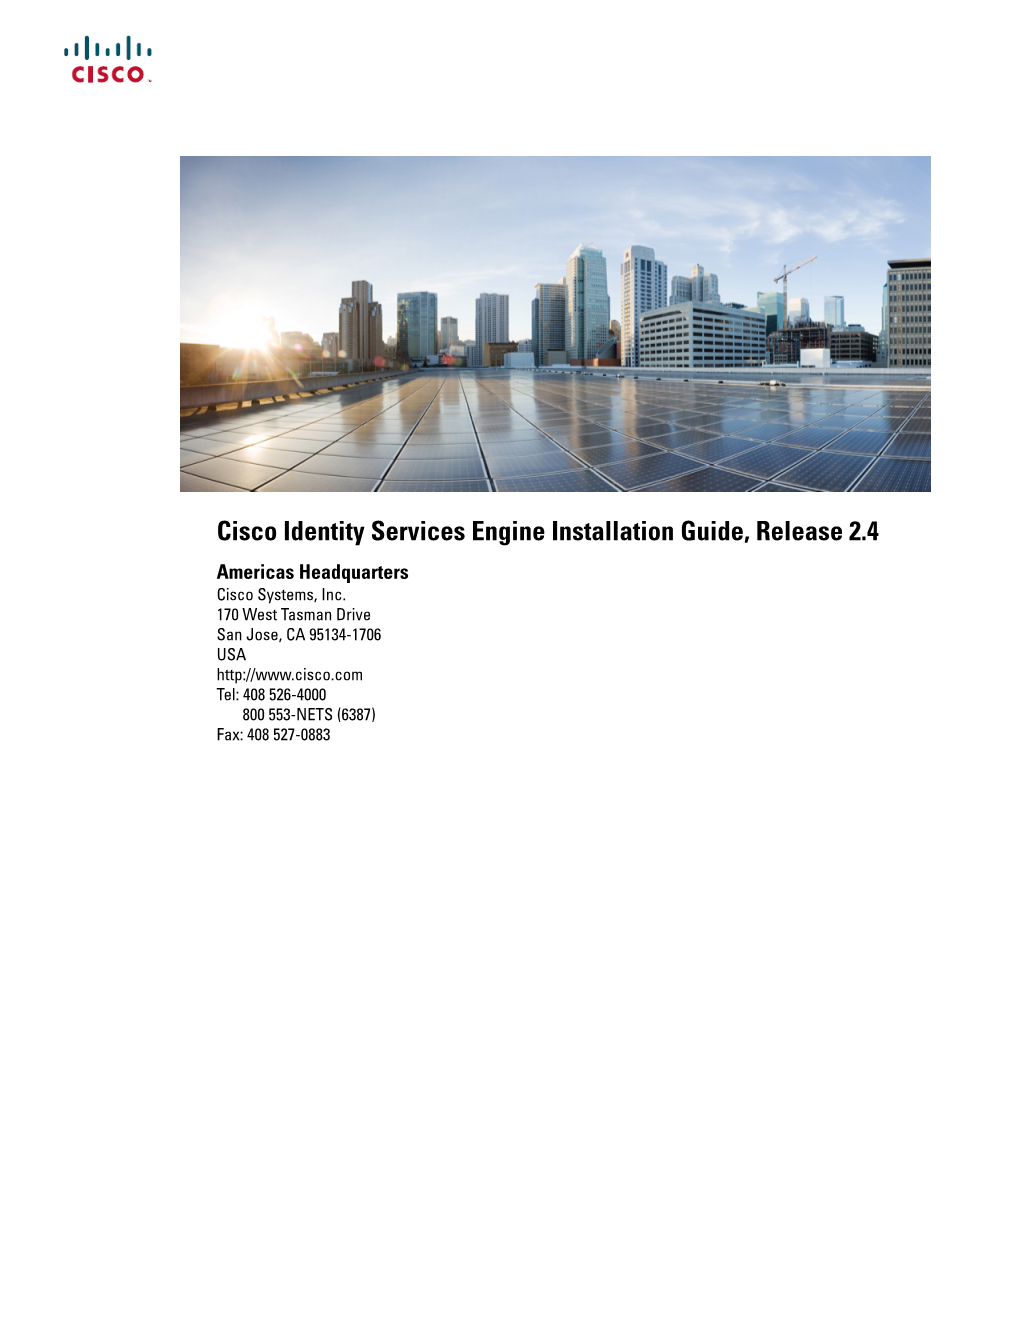 Cisco Identity Services Engine Installation Guide, Release 2.4 Americas Headquarters Cisco Systems, Inc